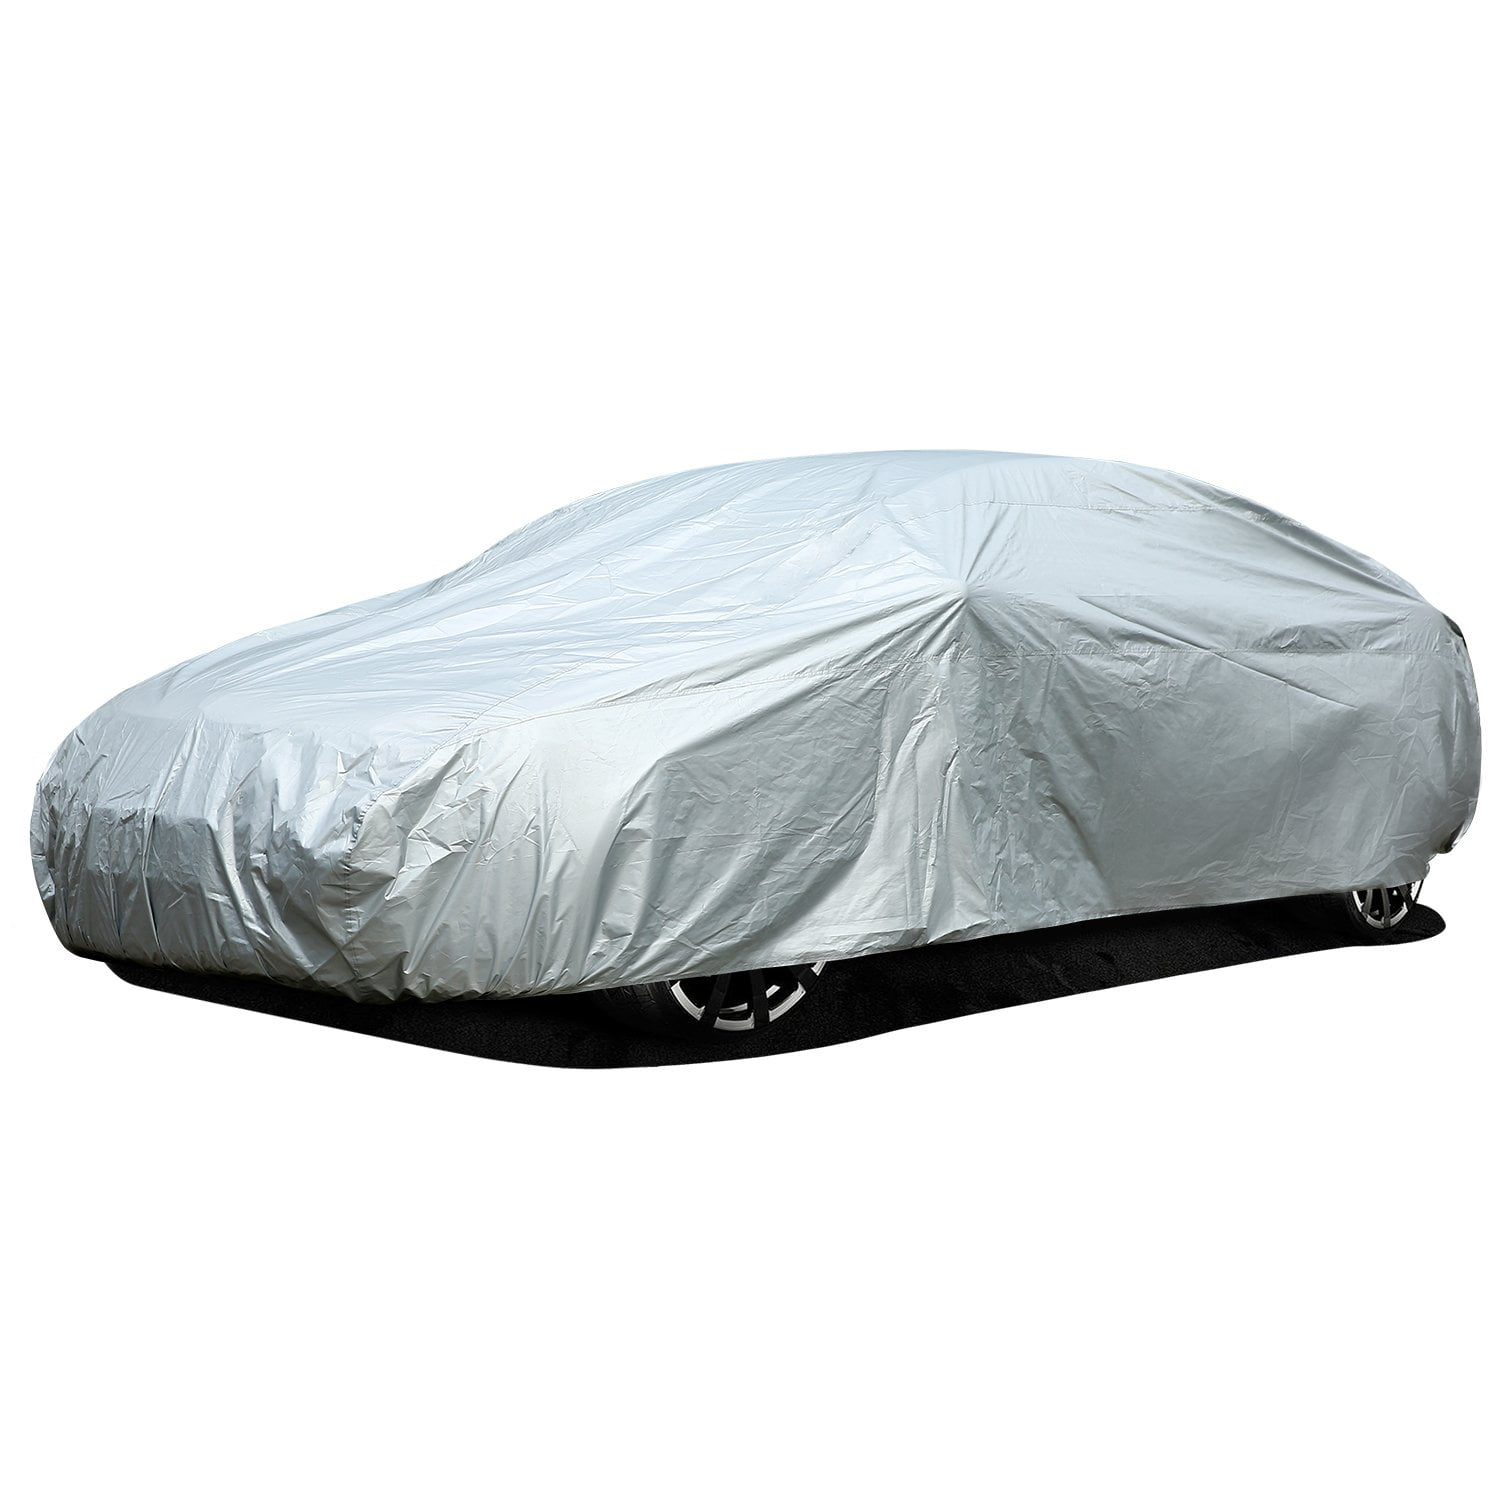 Windproof Ohuhu Car Cover for Sedan Fit Car Length 191-201 Upgraded Heavy Duty PEVA Material Dustproof 